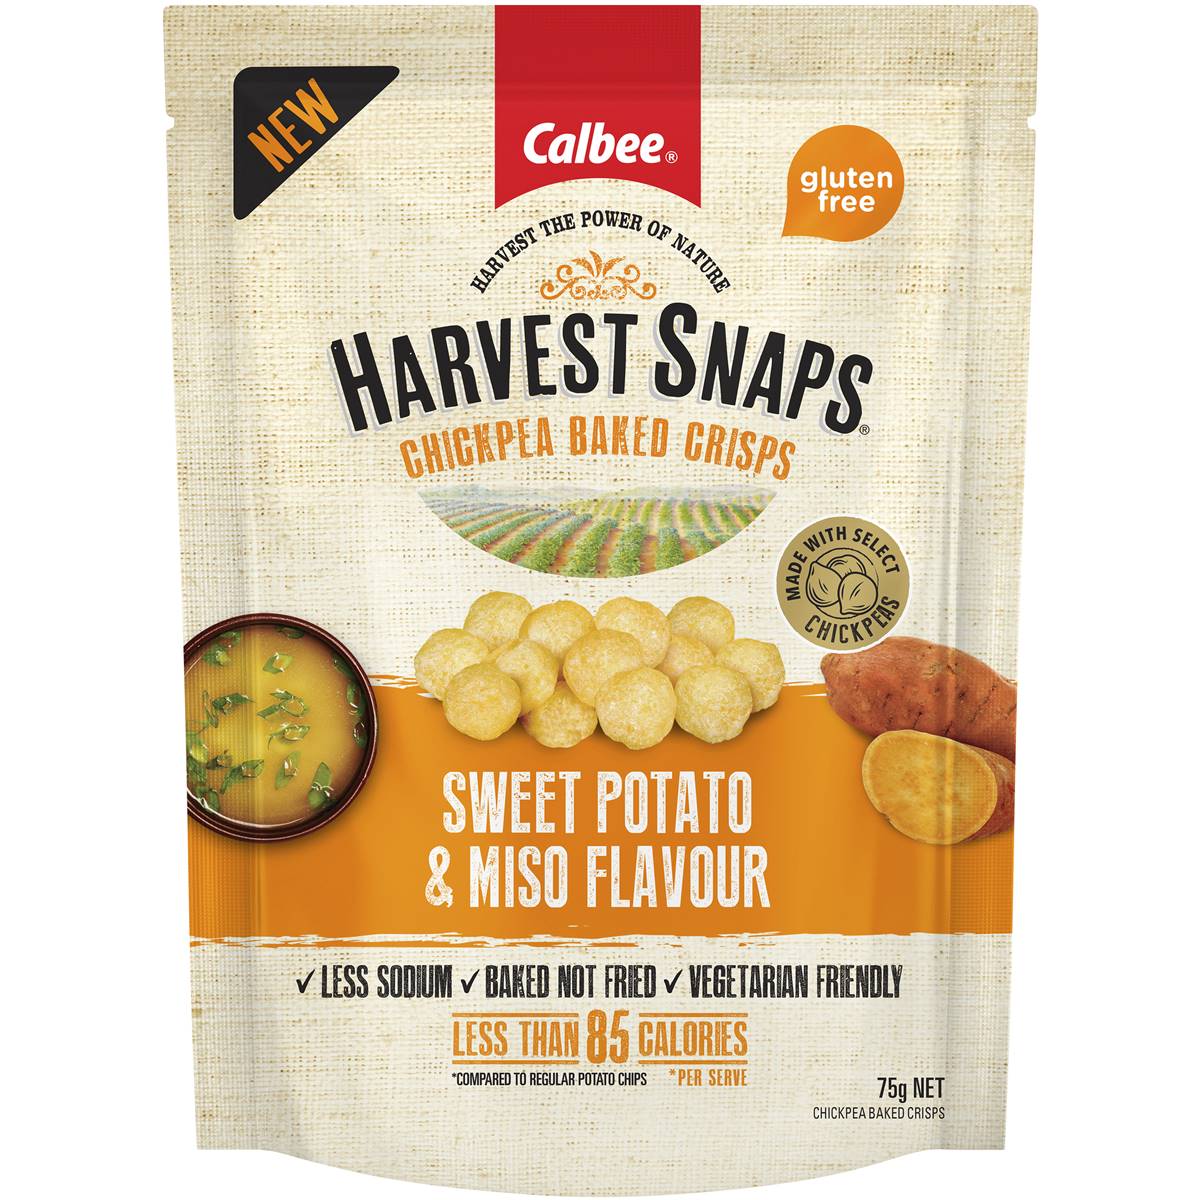 Calories in Calbee Harvest Snaps Chickpea Sweet Potato & Miso Baked Crisps